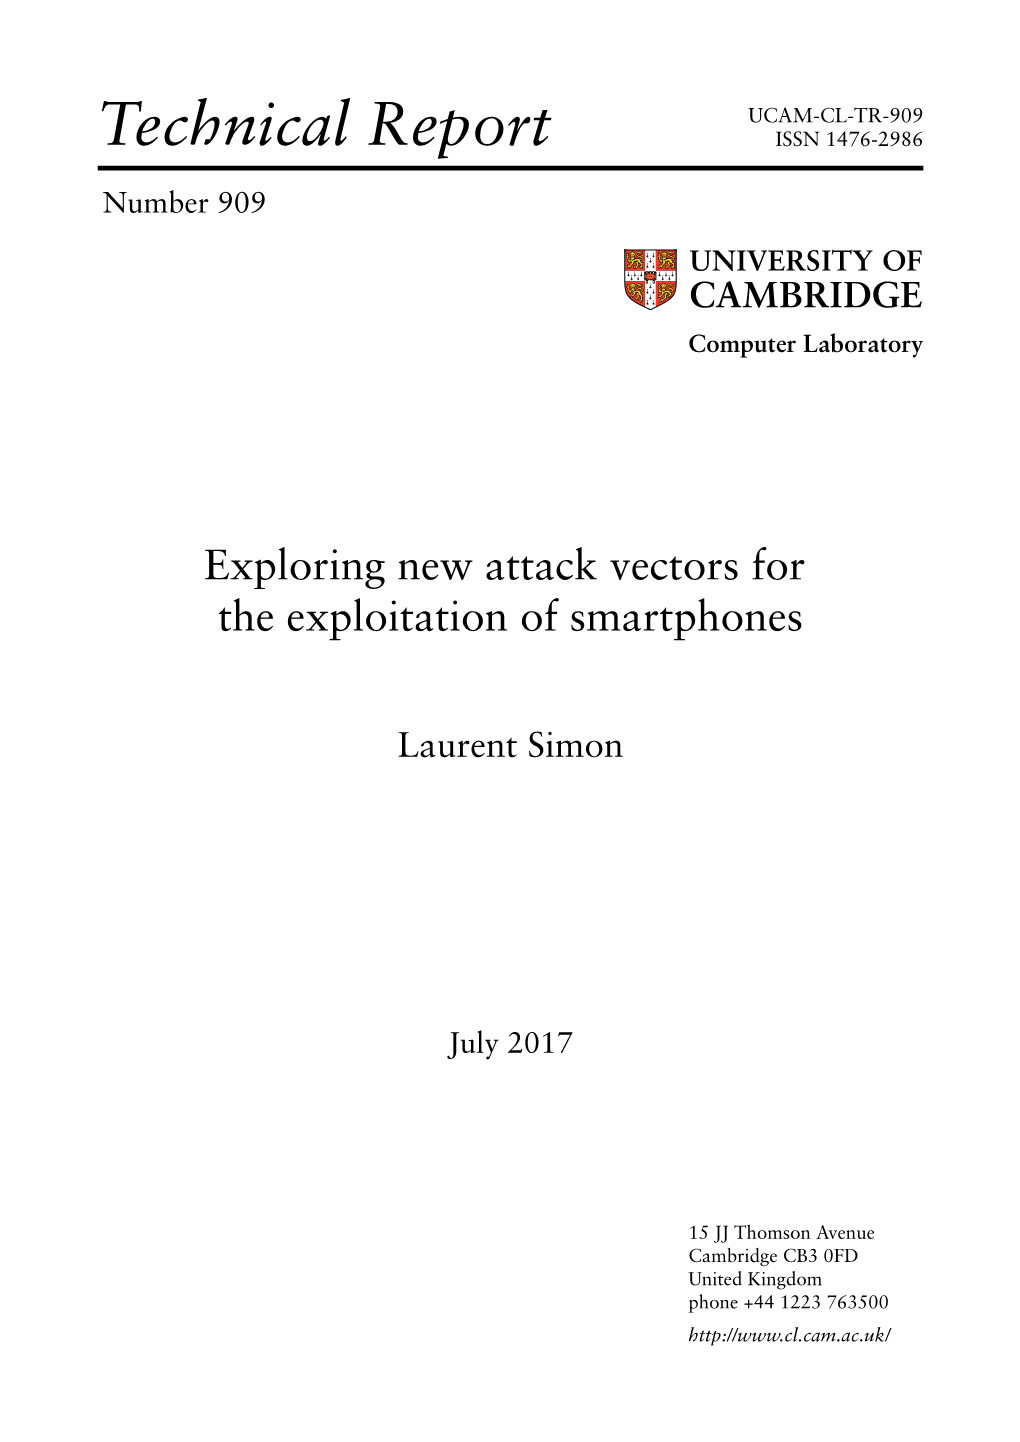 Exploring New Attack Vectors for the Exploitation of Smartphones